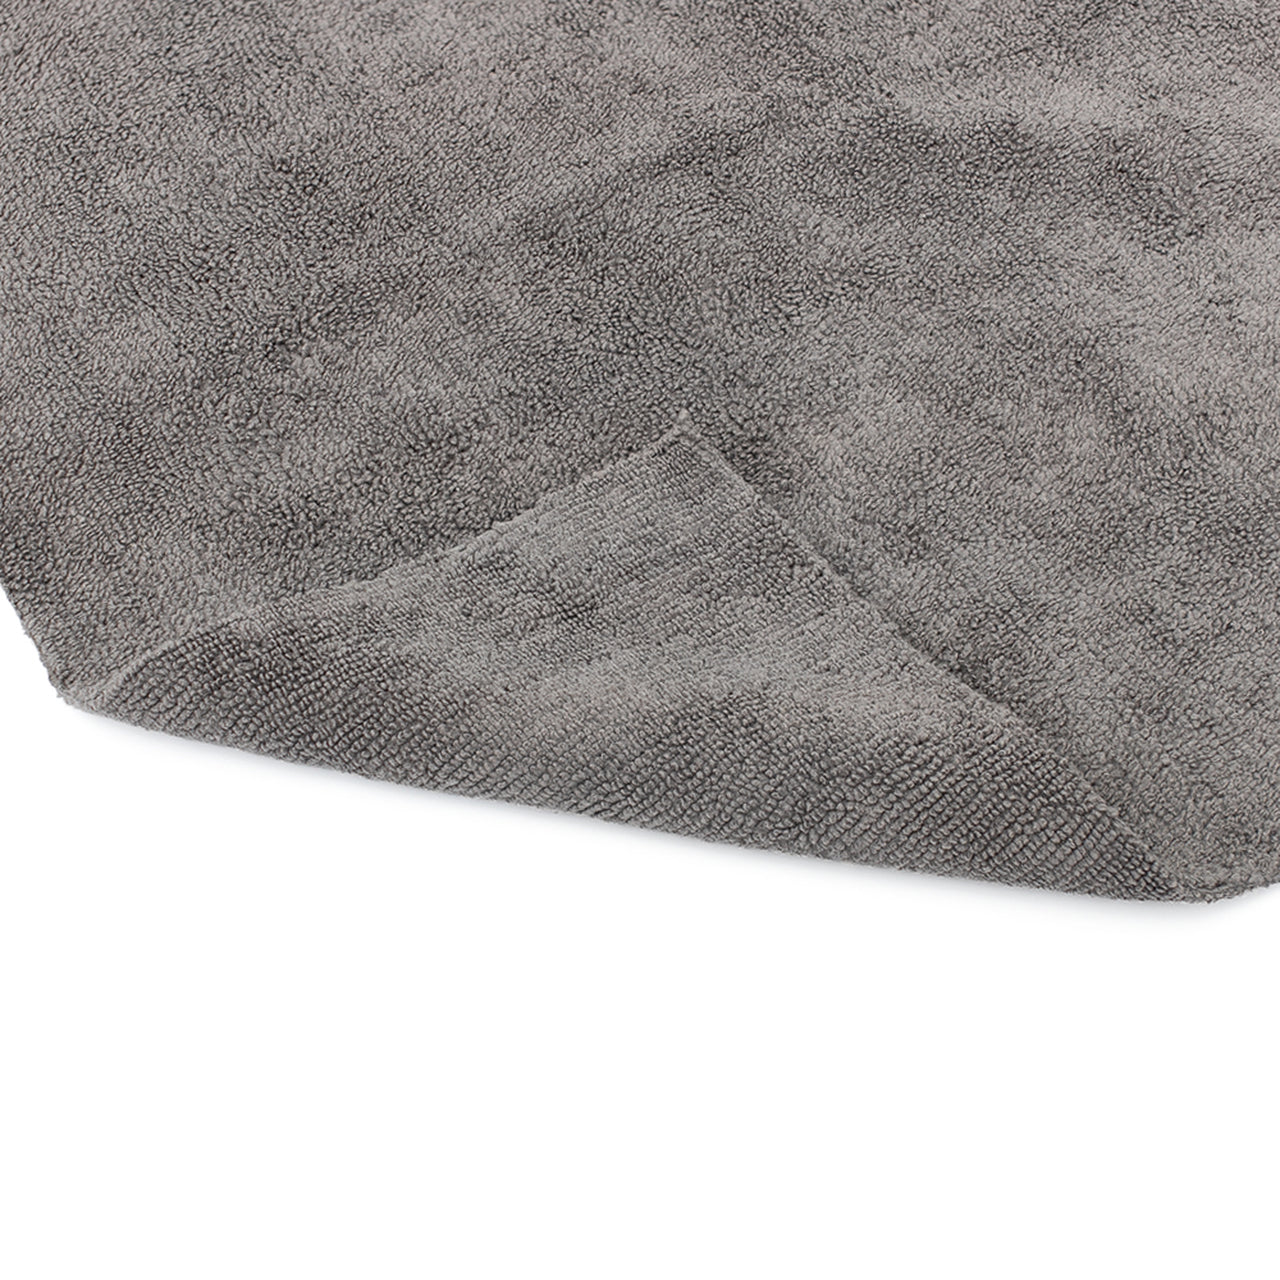 The Rag Company Edgeless 365 Grey 16 x 16 Microfiber Polishing Towel